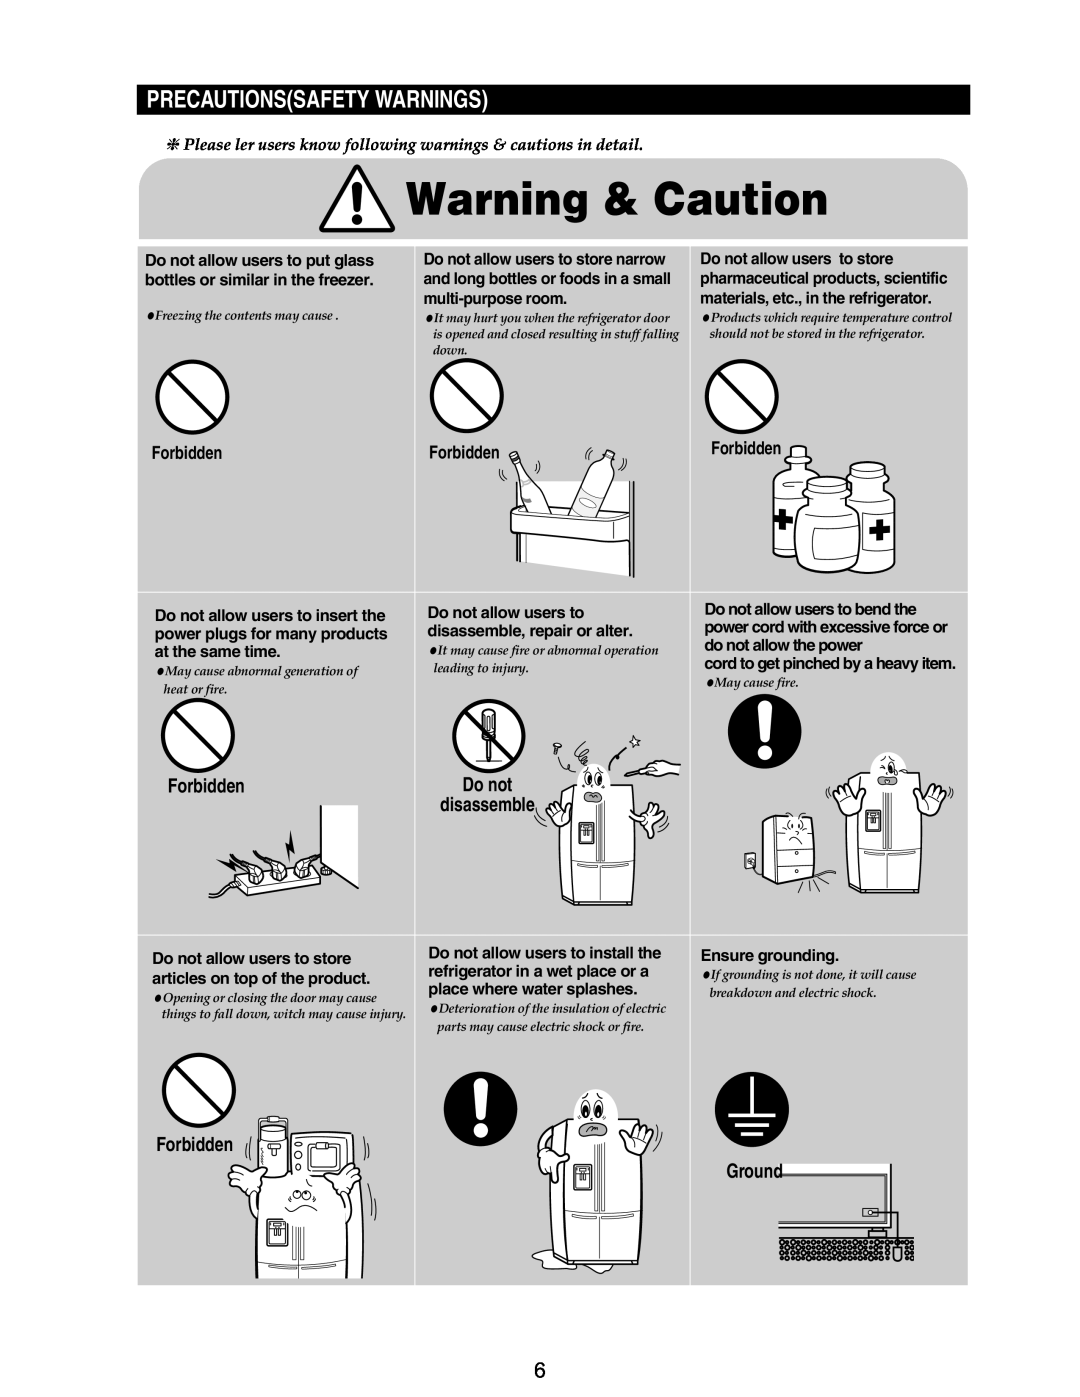 Samsung RM255BABB Warning & Caution, Precautionssafety Warnings, disassemble, Forbidden Ground, multi-purpose room 